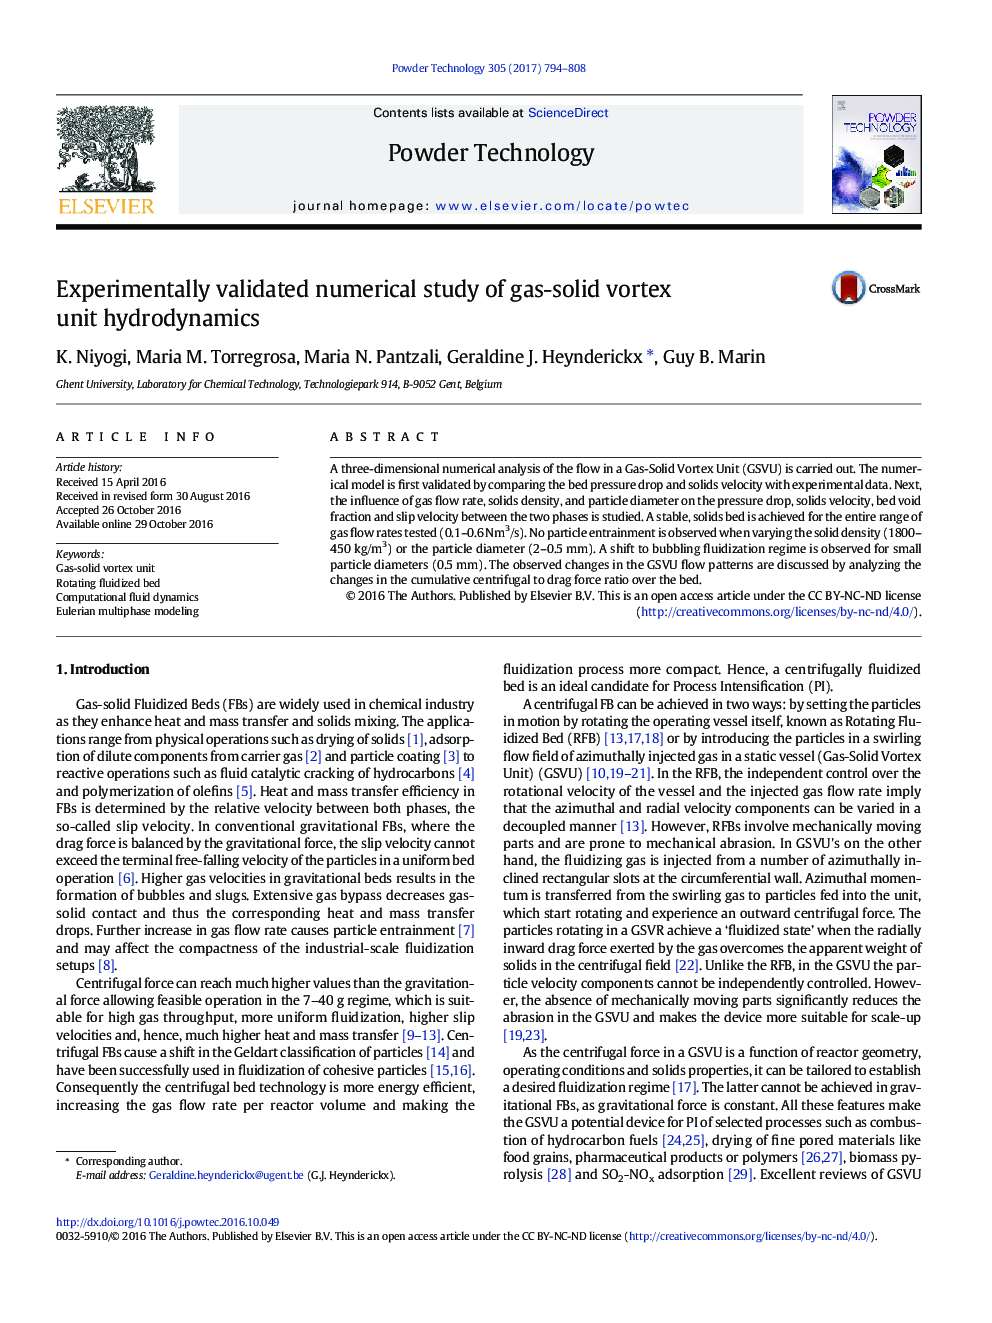 Experimentally validated numerical study of gas-solid vortex unit hydrodynamics